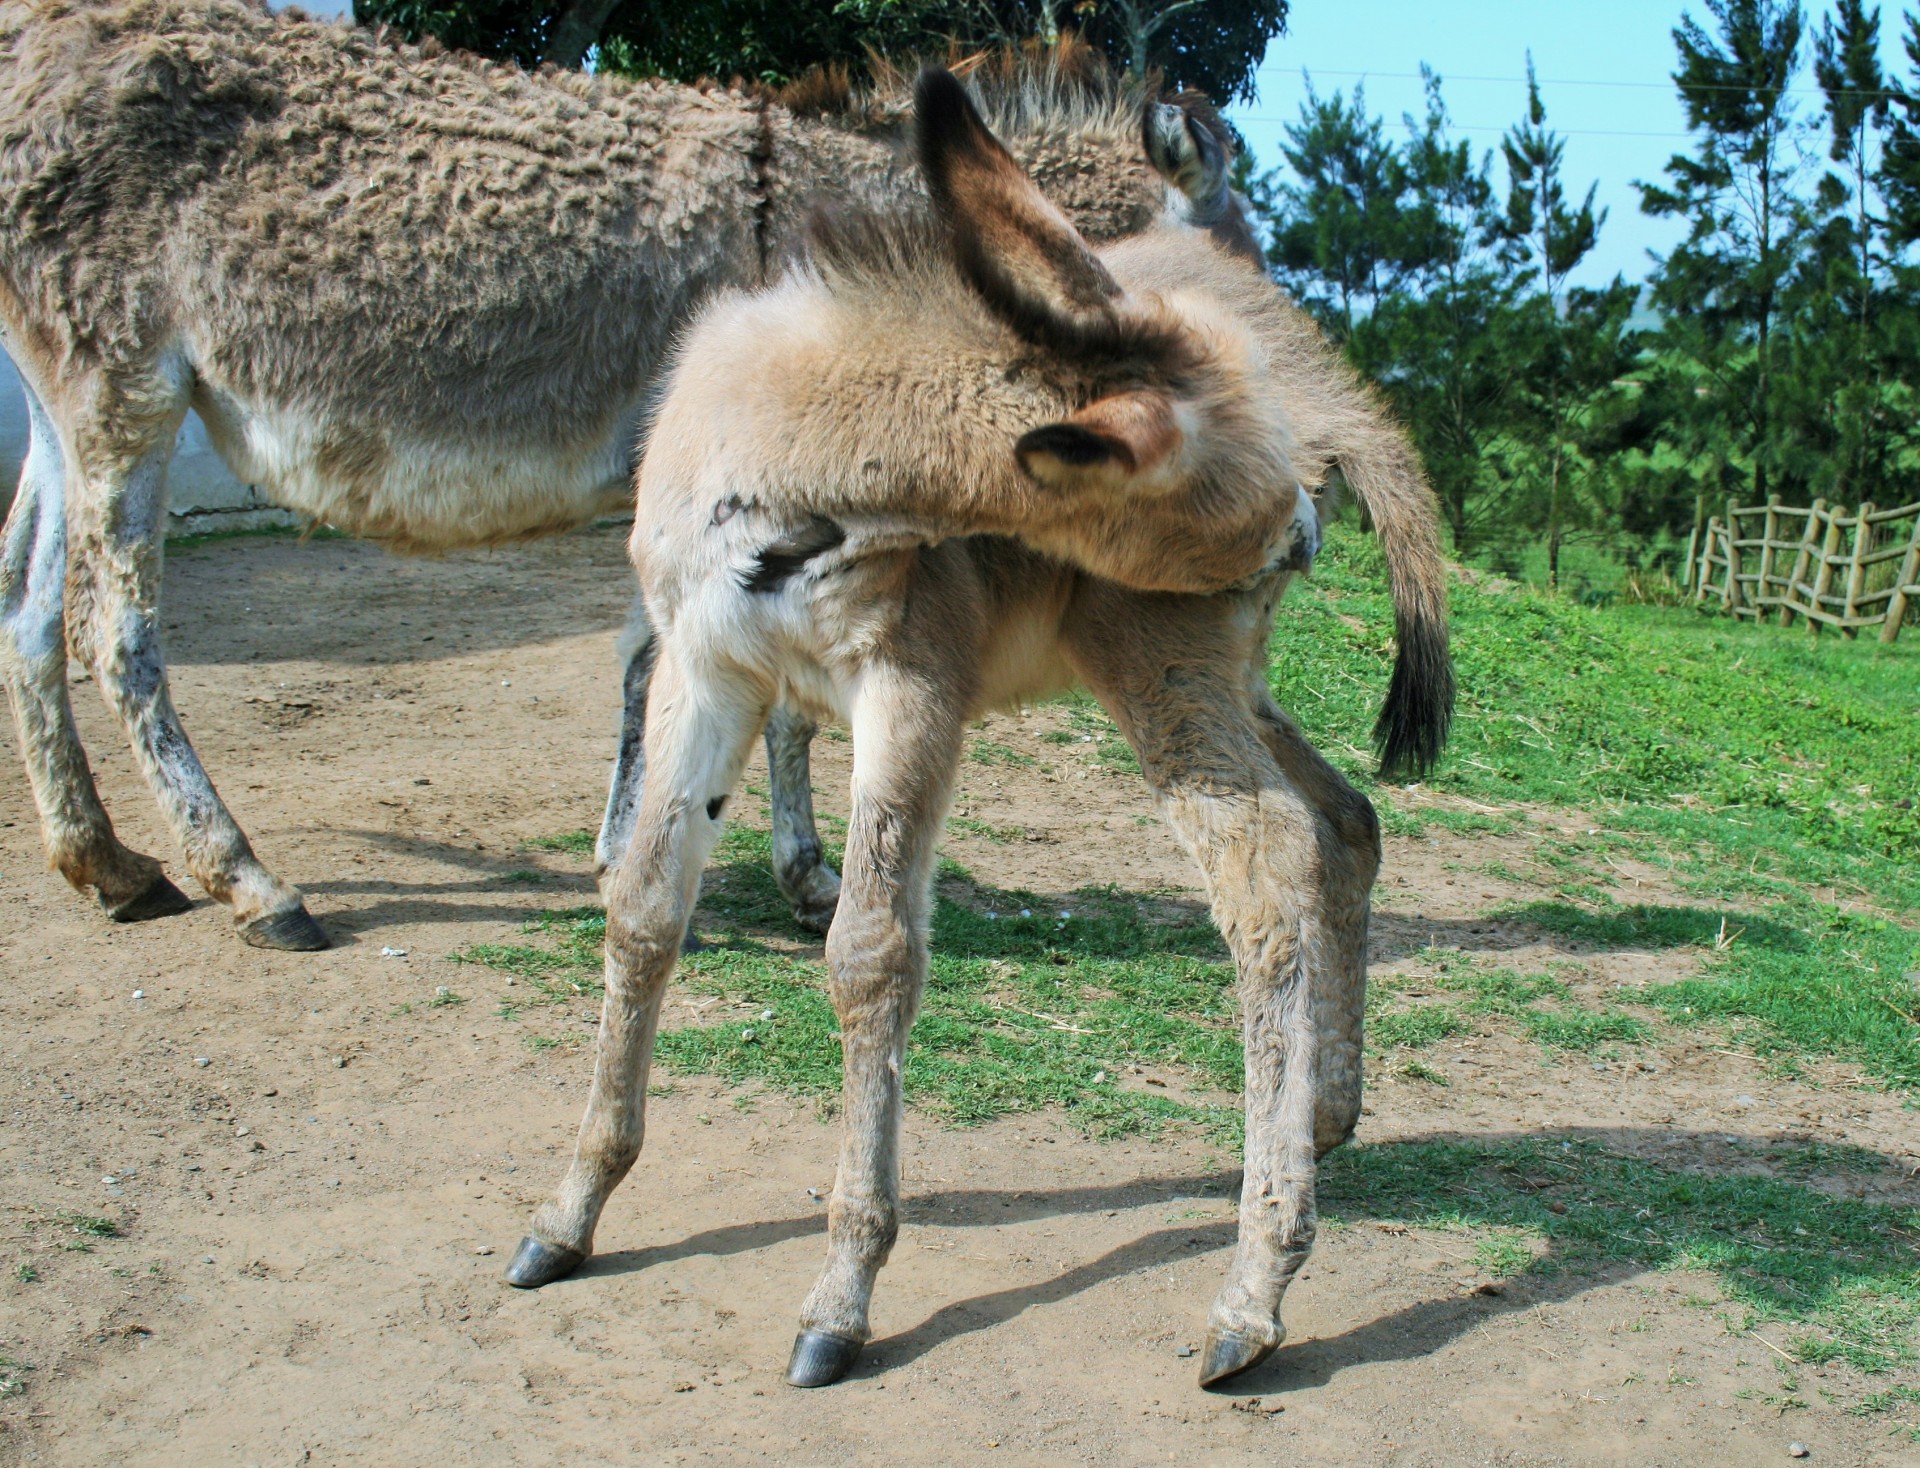 Download Animal Farm Donkey Free Photo.